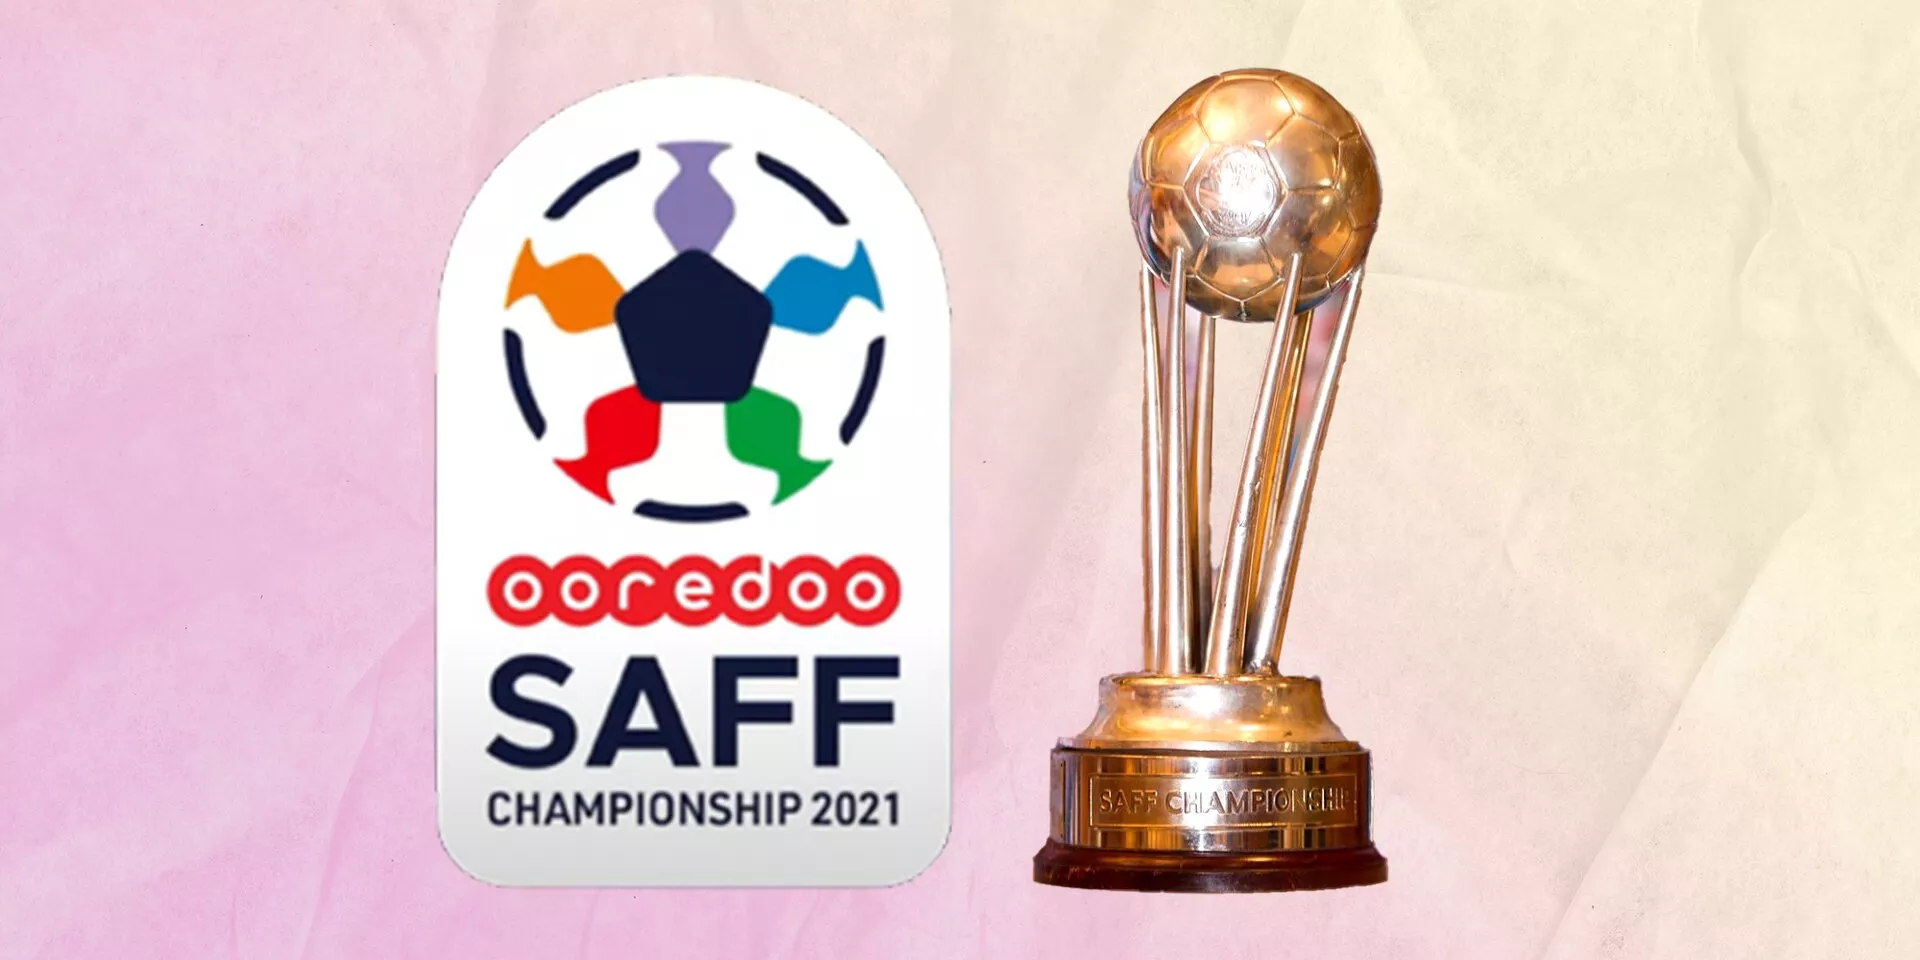 2021 SAFF Championship - Wikipedia